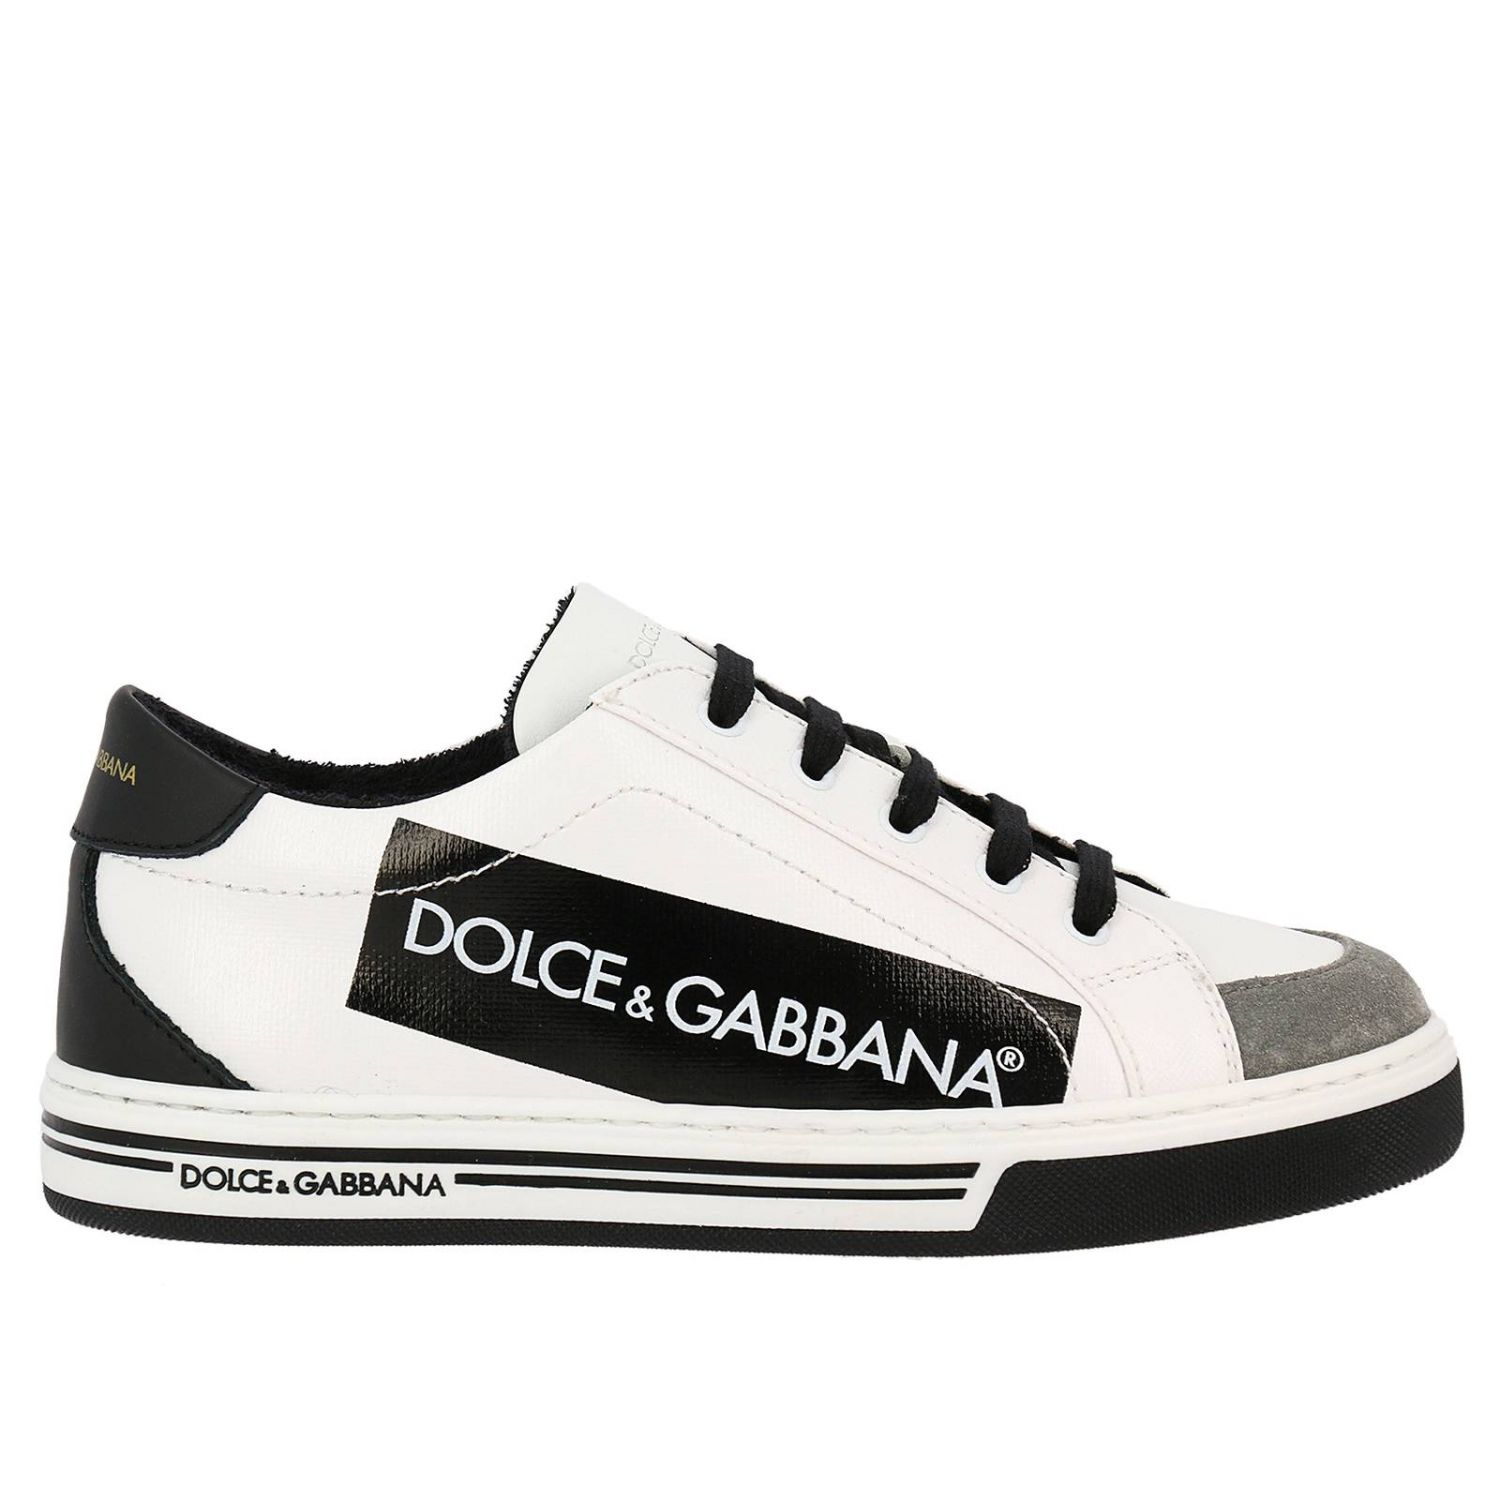 Dolce & Gabbana Outlet: Shoes kids - Royal Blue | Shoes Dolce & Gabbana ...